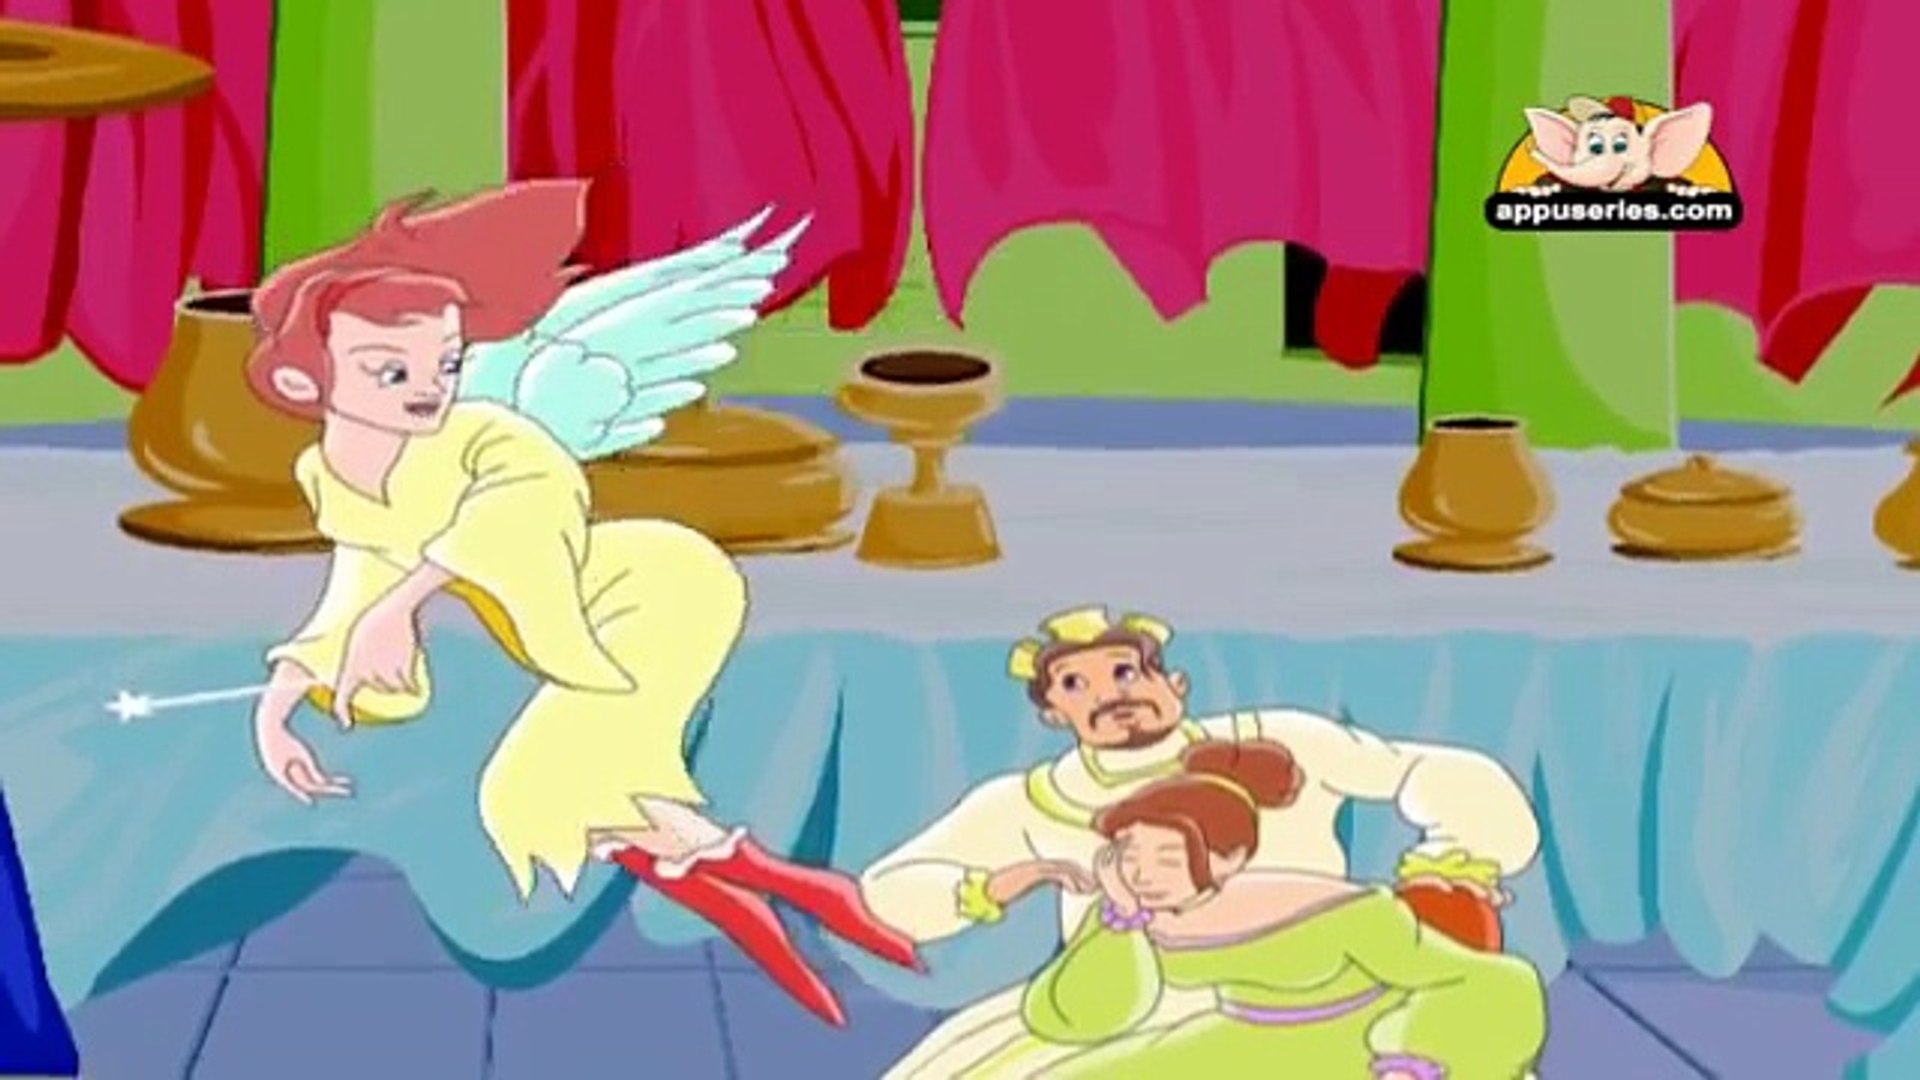 Watch Online Fairy Tales cartoon in Hindi 2015 - video Dailymotion